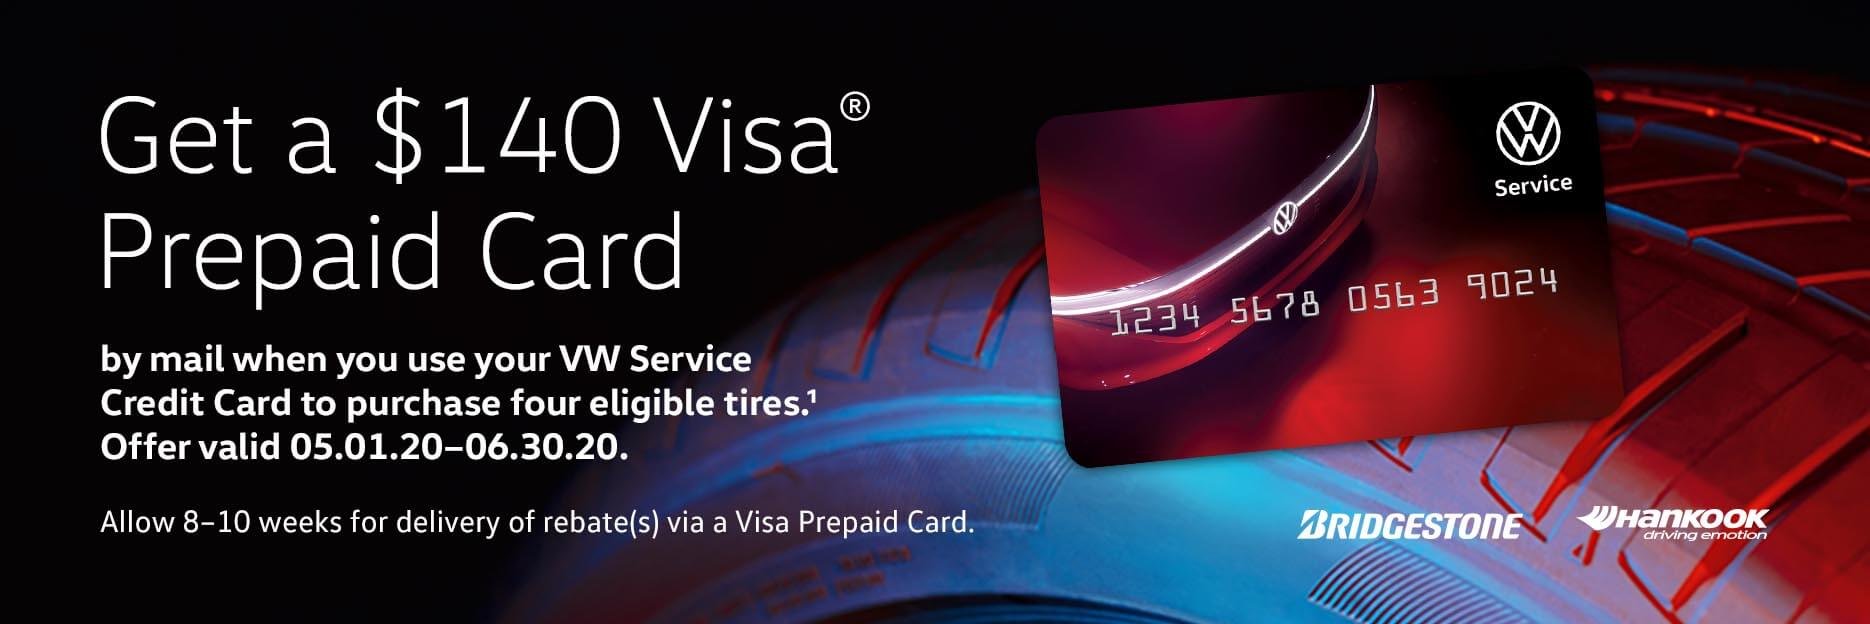 vw-credit-card-rebate-volkswagen-rubber-seal-care-kit-vw-service